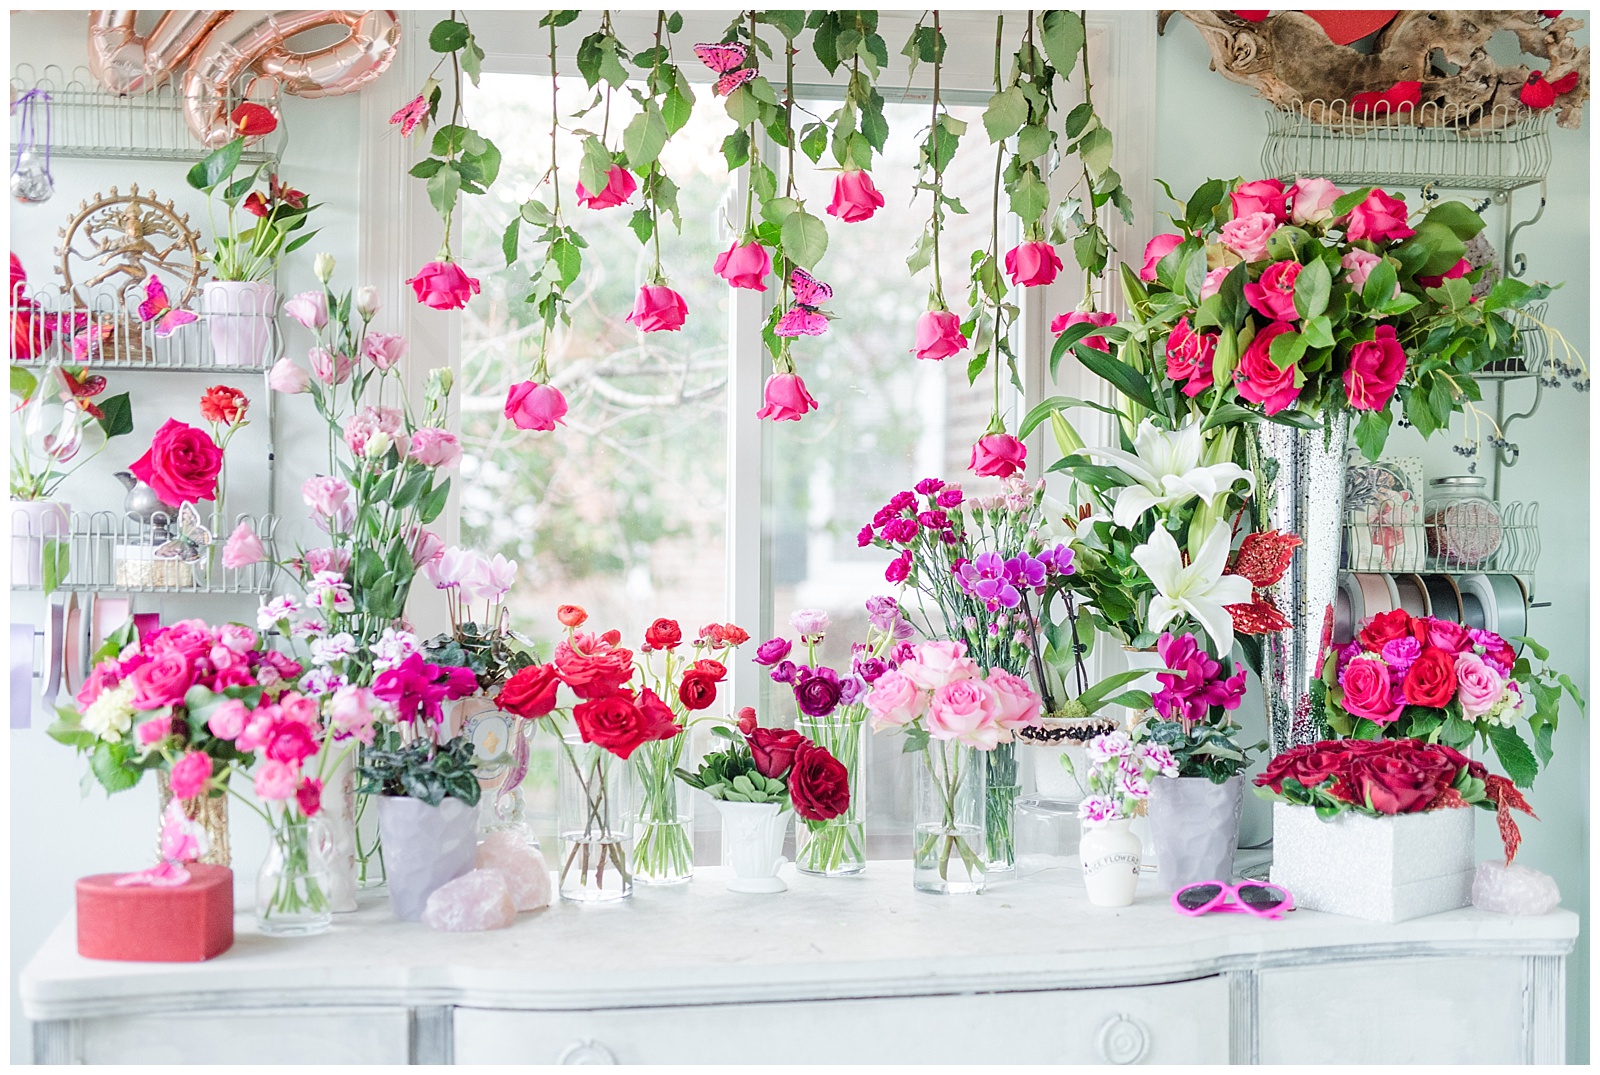 atelier-ashley-flowers-alexandria-va-wedding-florist-photo.jpg